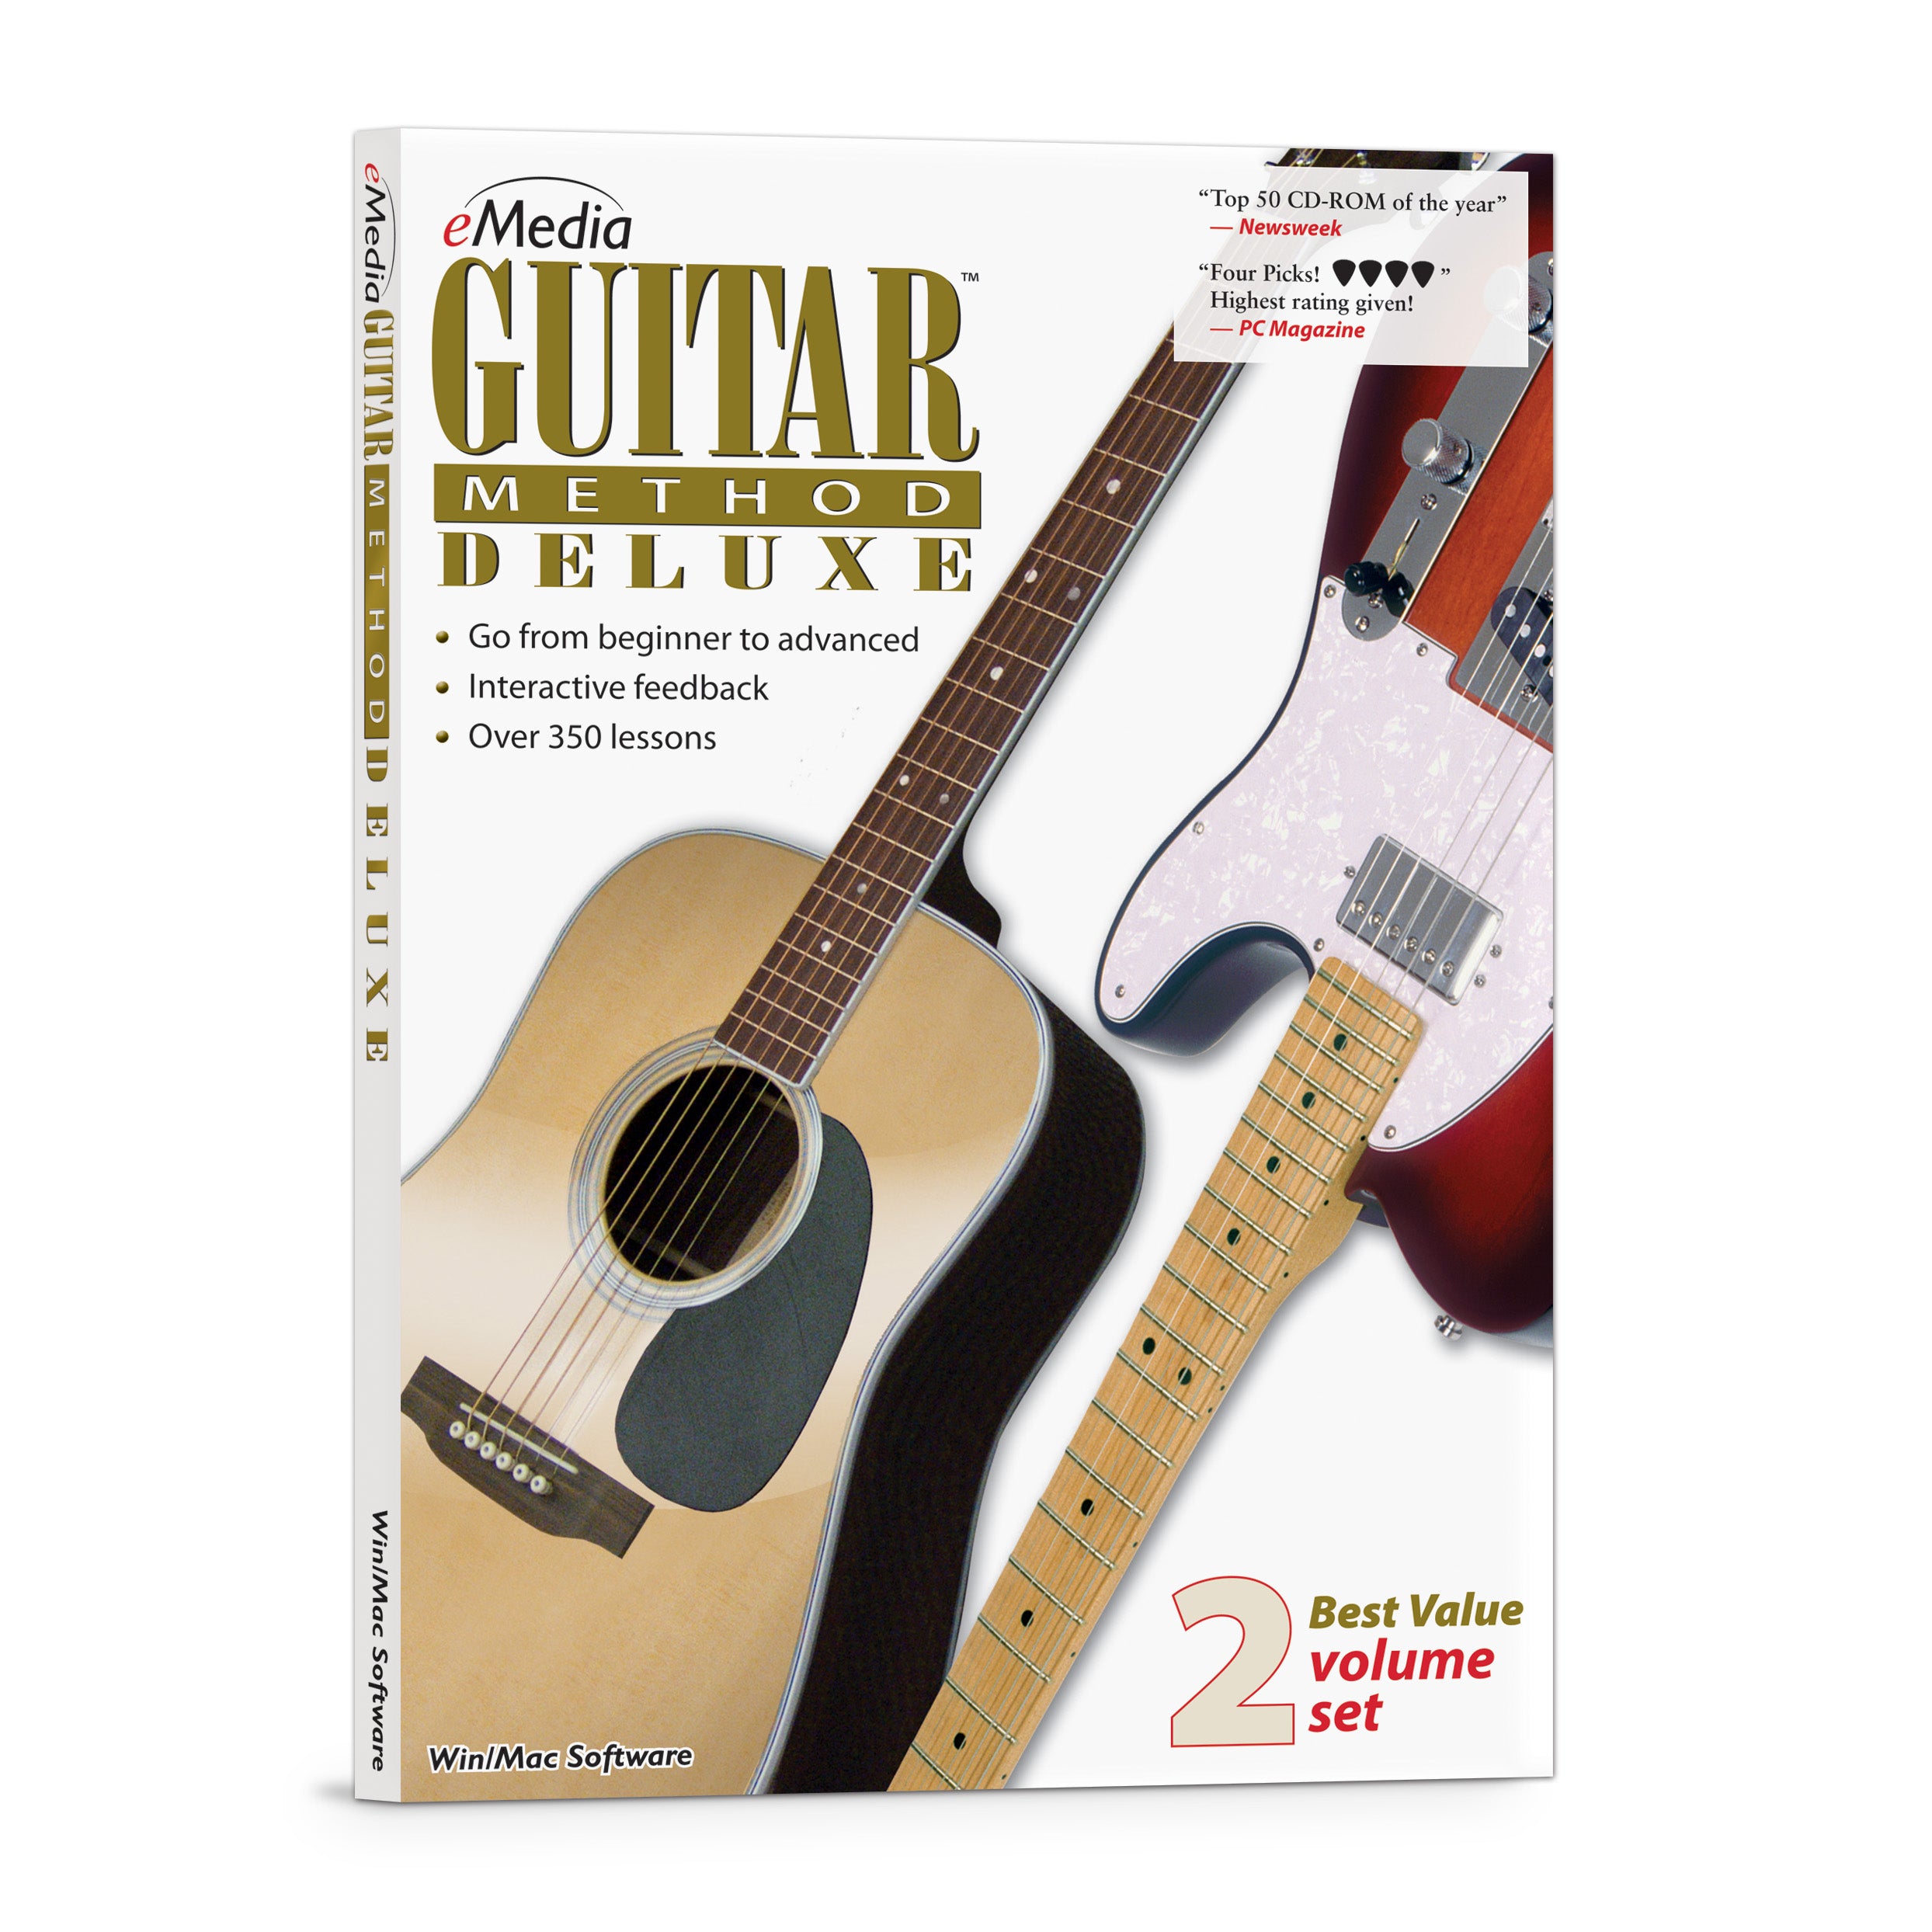 eMedia Guitar Method Deluxe & Guitar Lesson Software